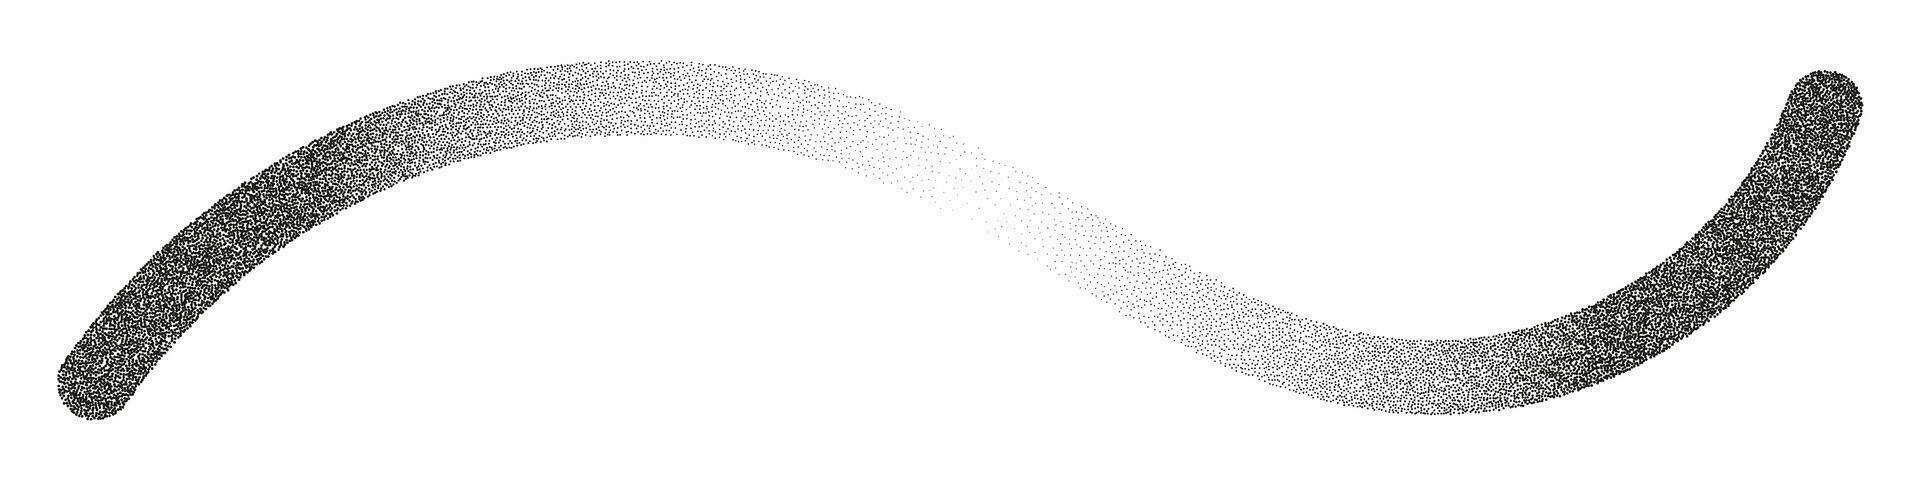 arenoso textura arena en transparente fondo.monocromo ruido medios tonos, arena patrón.vector aislado ilustración vector